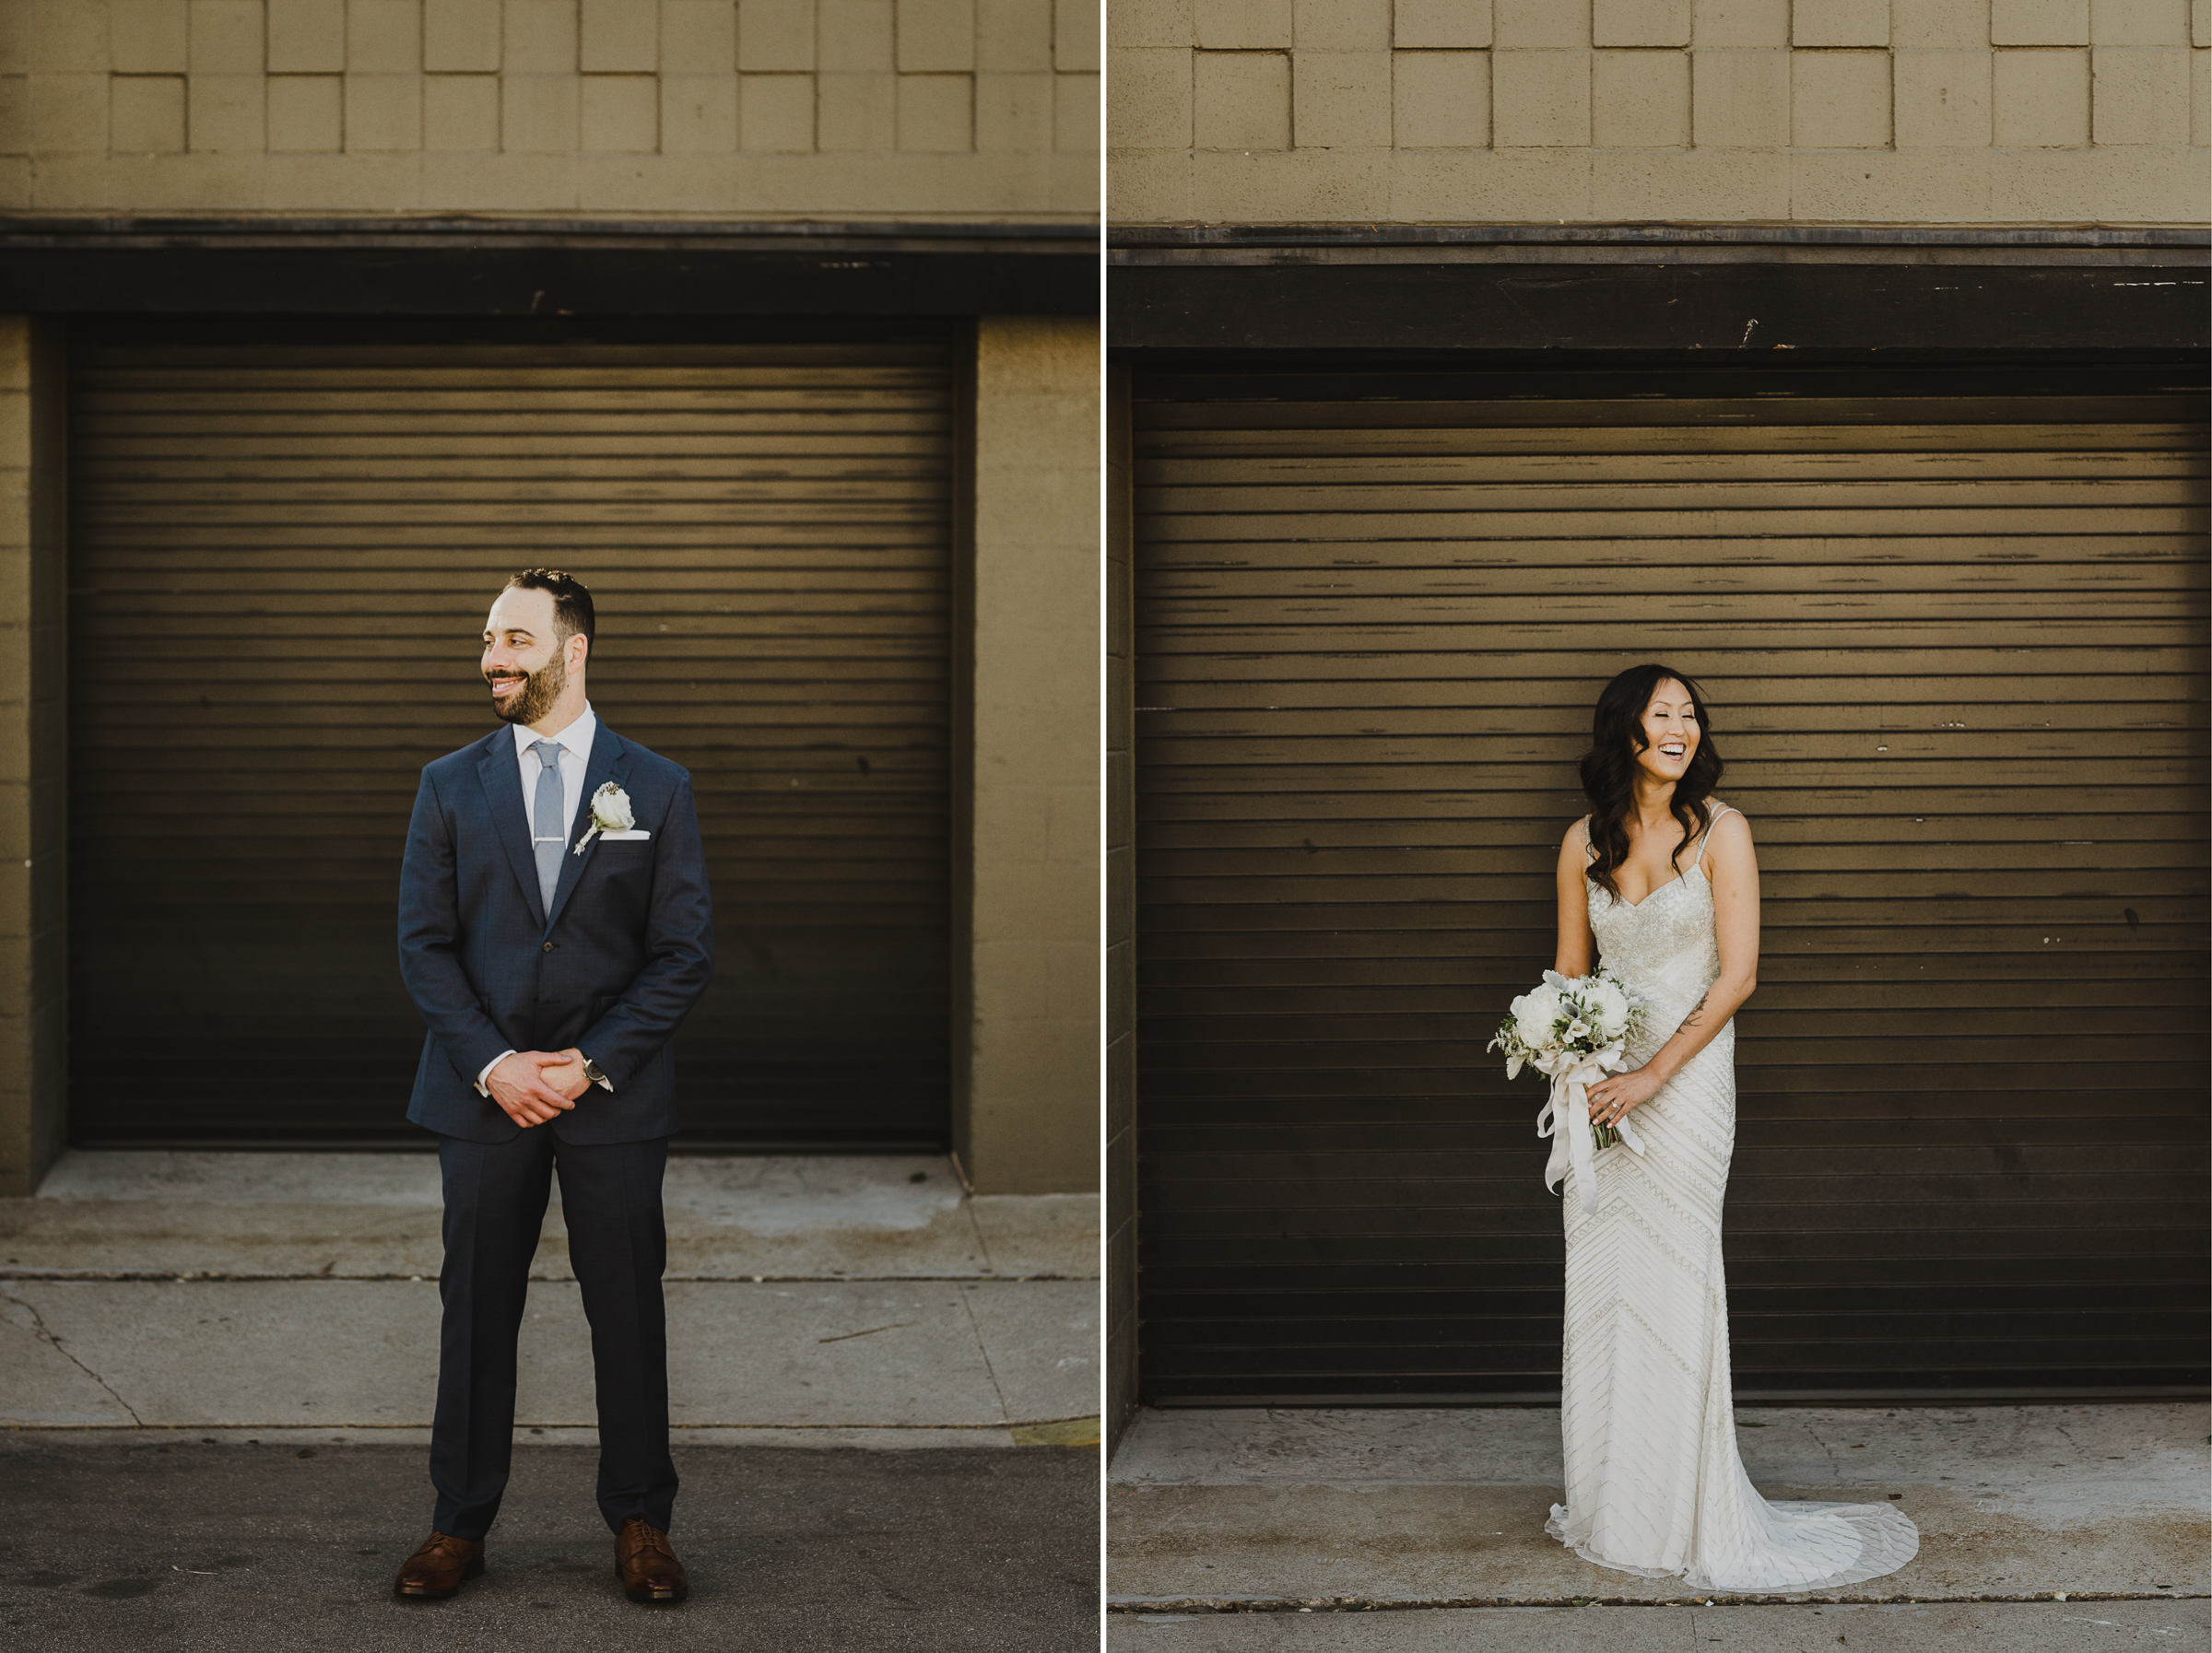 ©Isaiah + Taylor Photography - Big Door Studios Wedding, El Segundo, Los Angeles Wedding Photographer-18.jpg